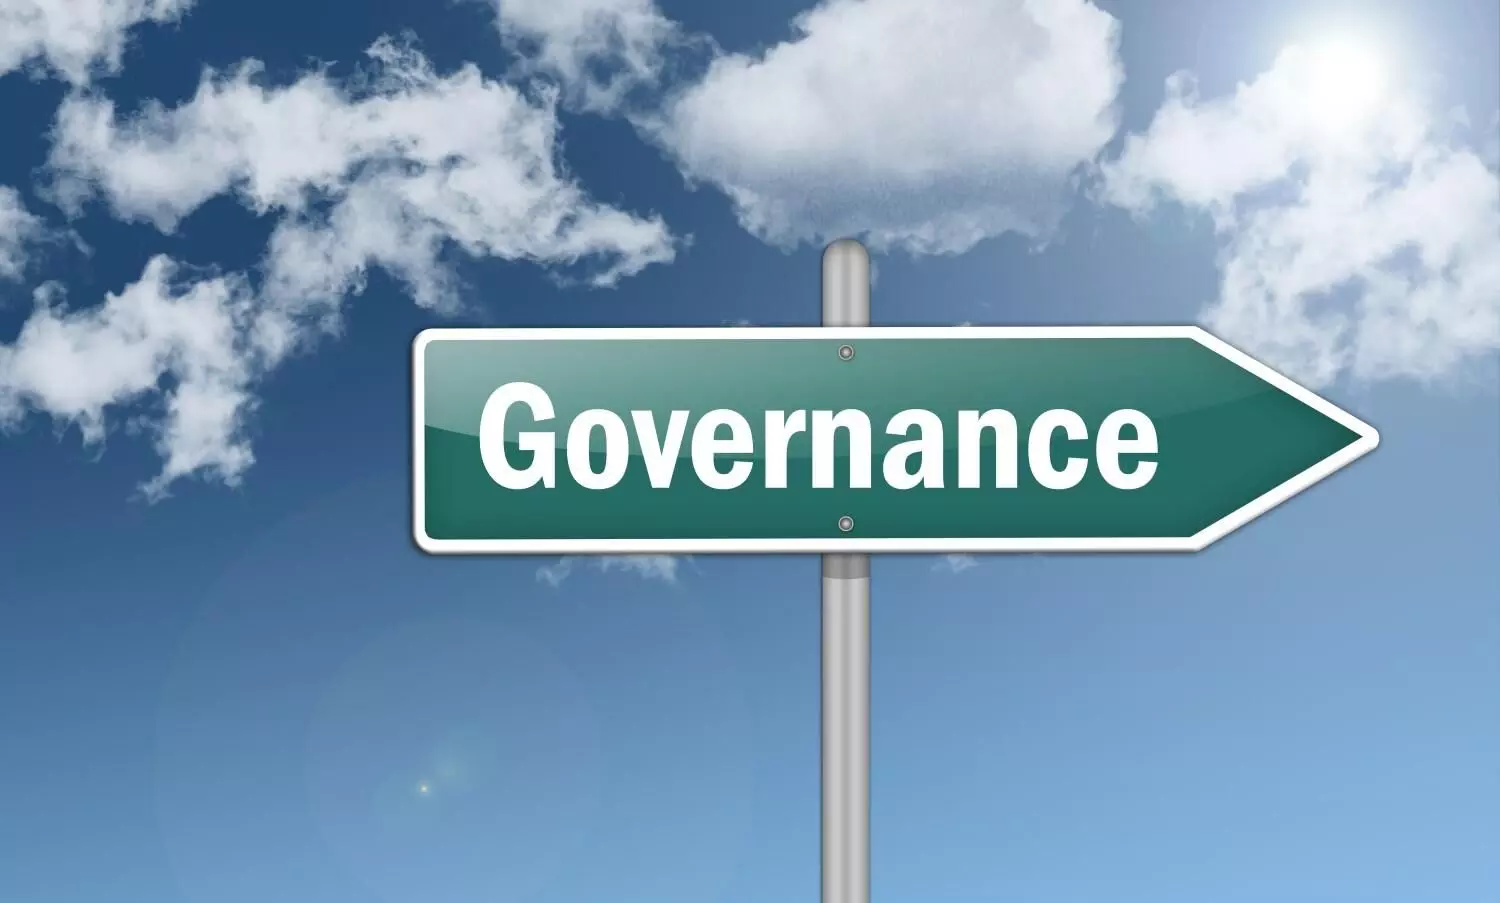 Opinion: Disrupting governance through democracy 2.0